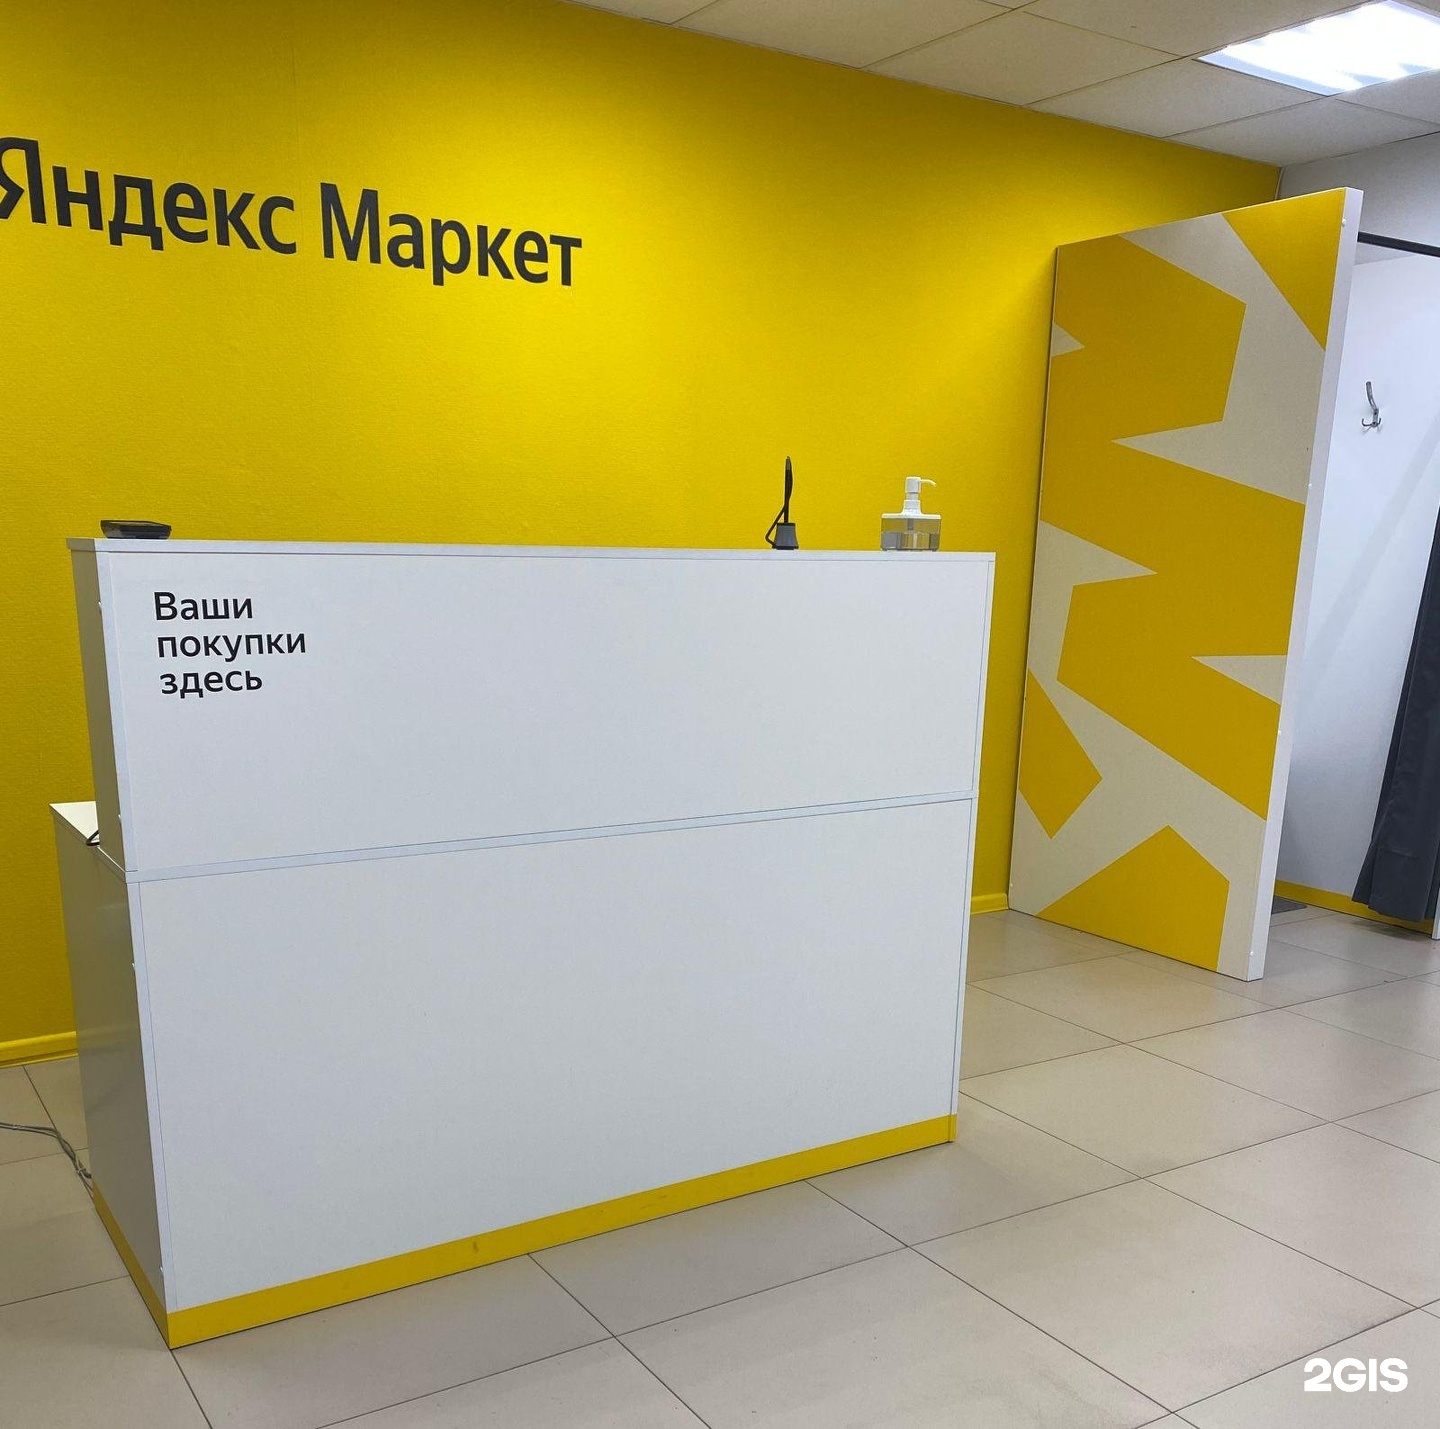 Пункт выдачи заказов Яндекс Маркет